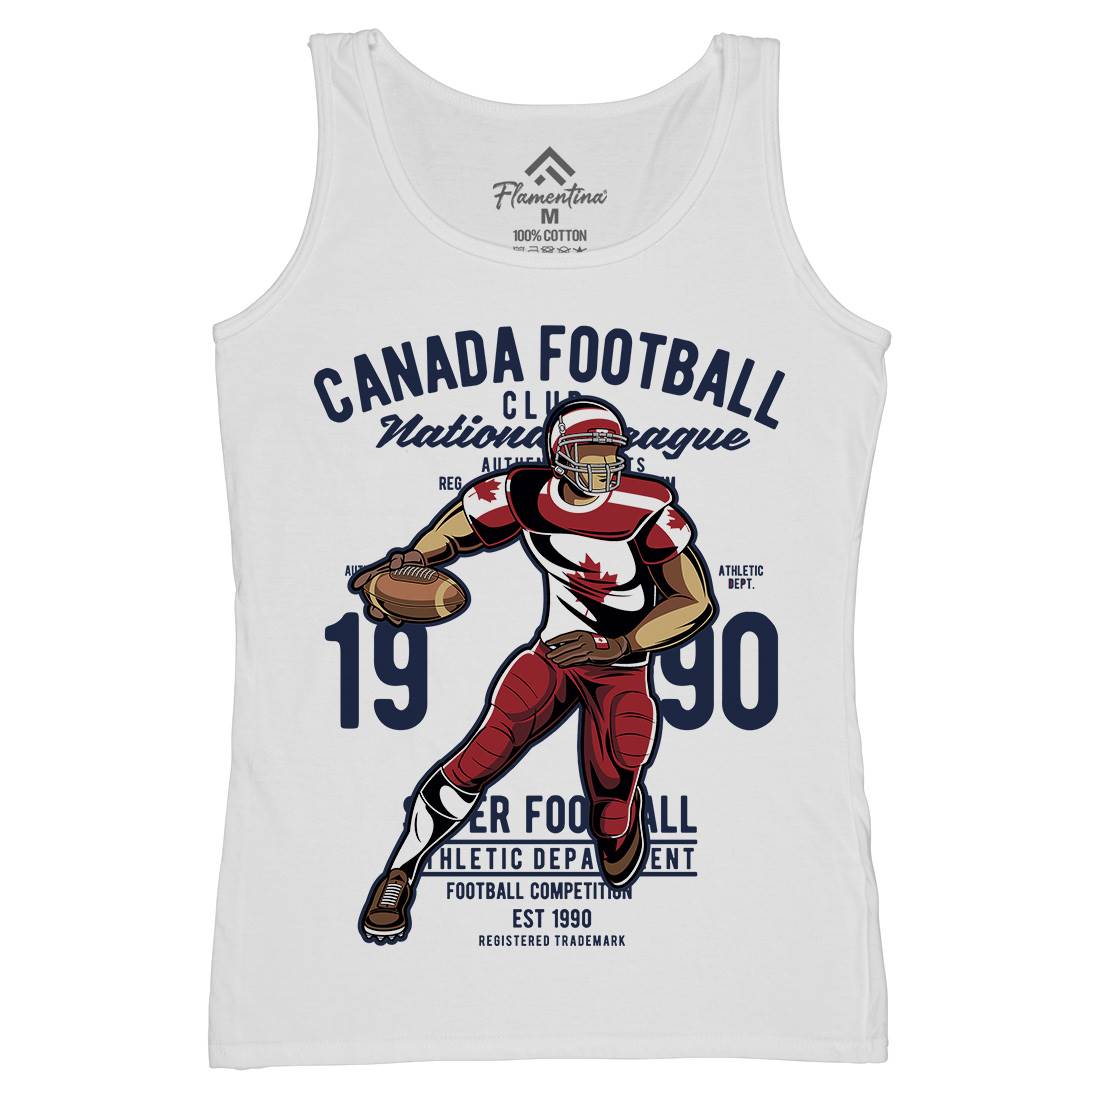 Canada Football Womens Organic Tank Top Vest Sport C326